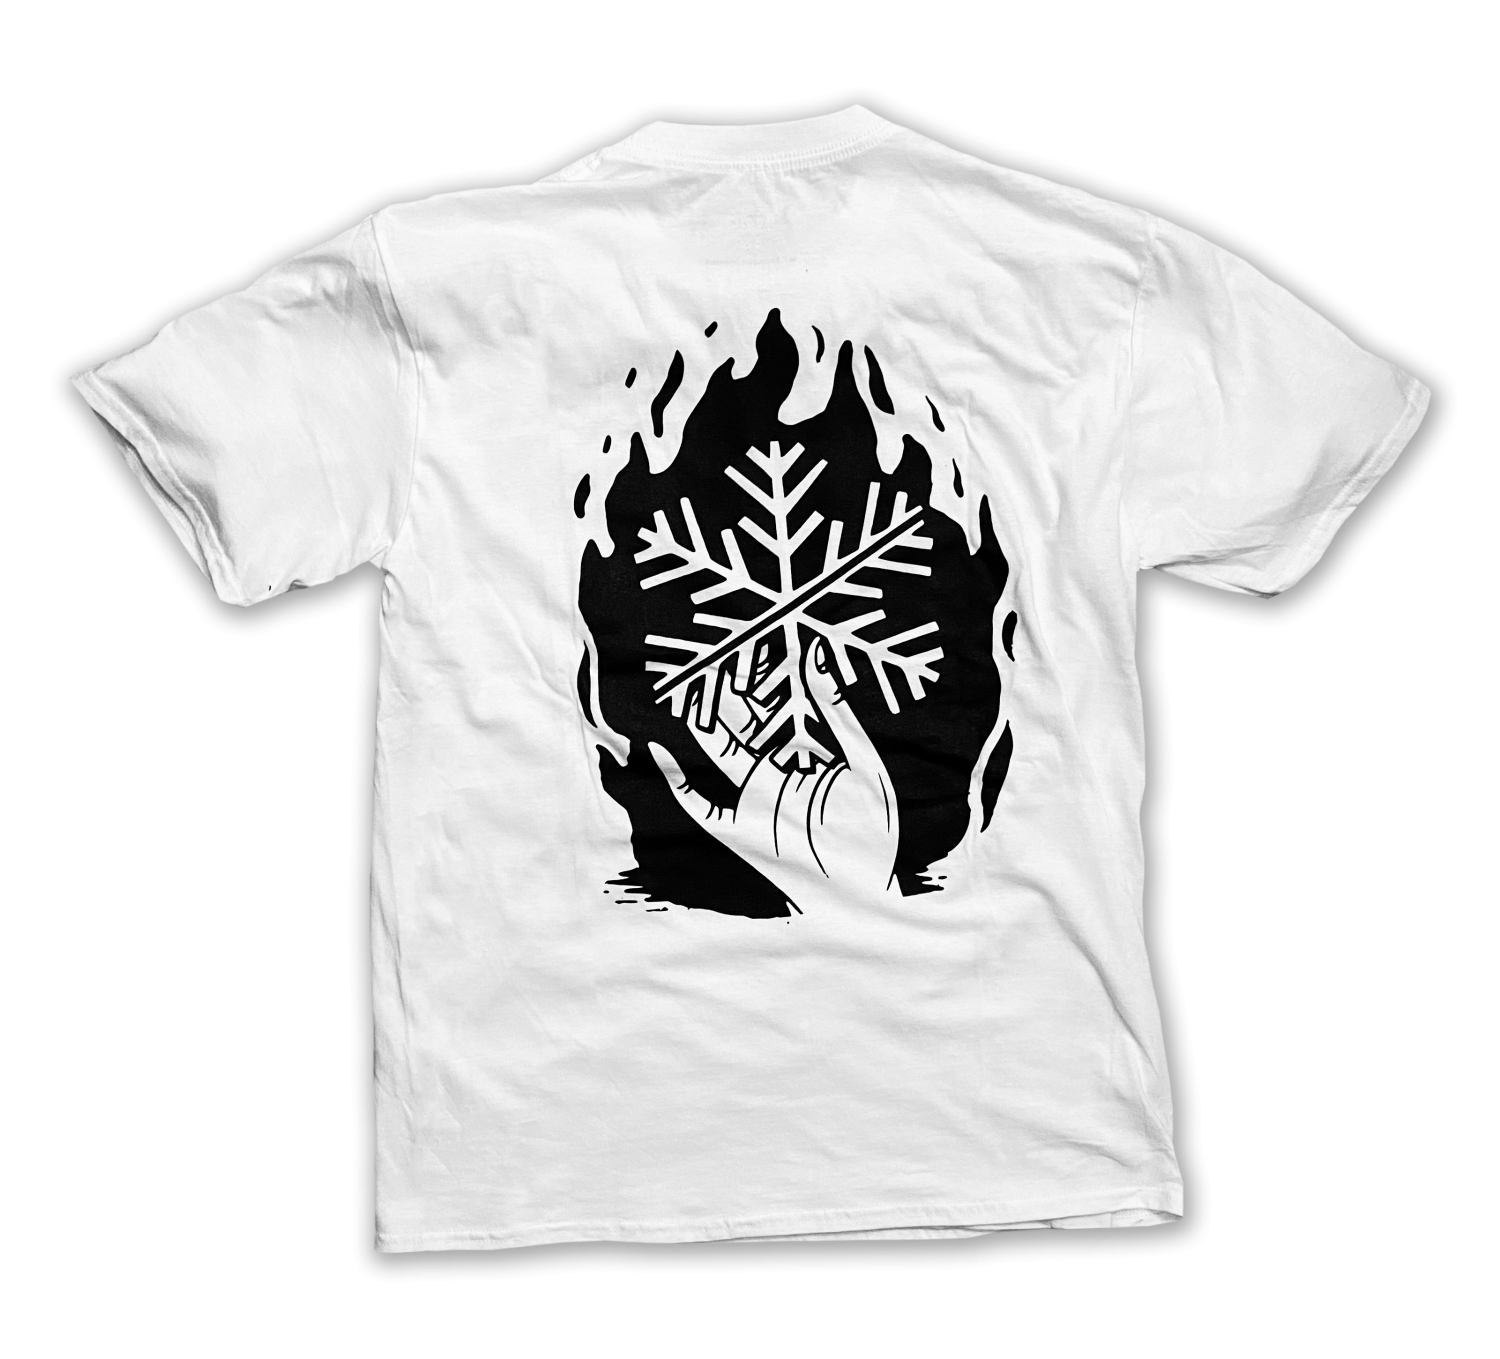 MEW Fire T-shirt [BACK]